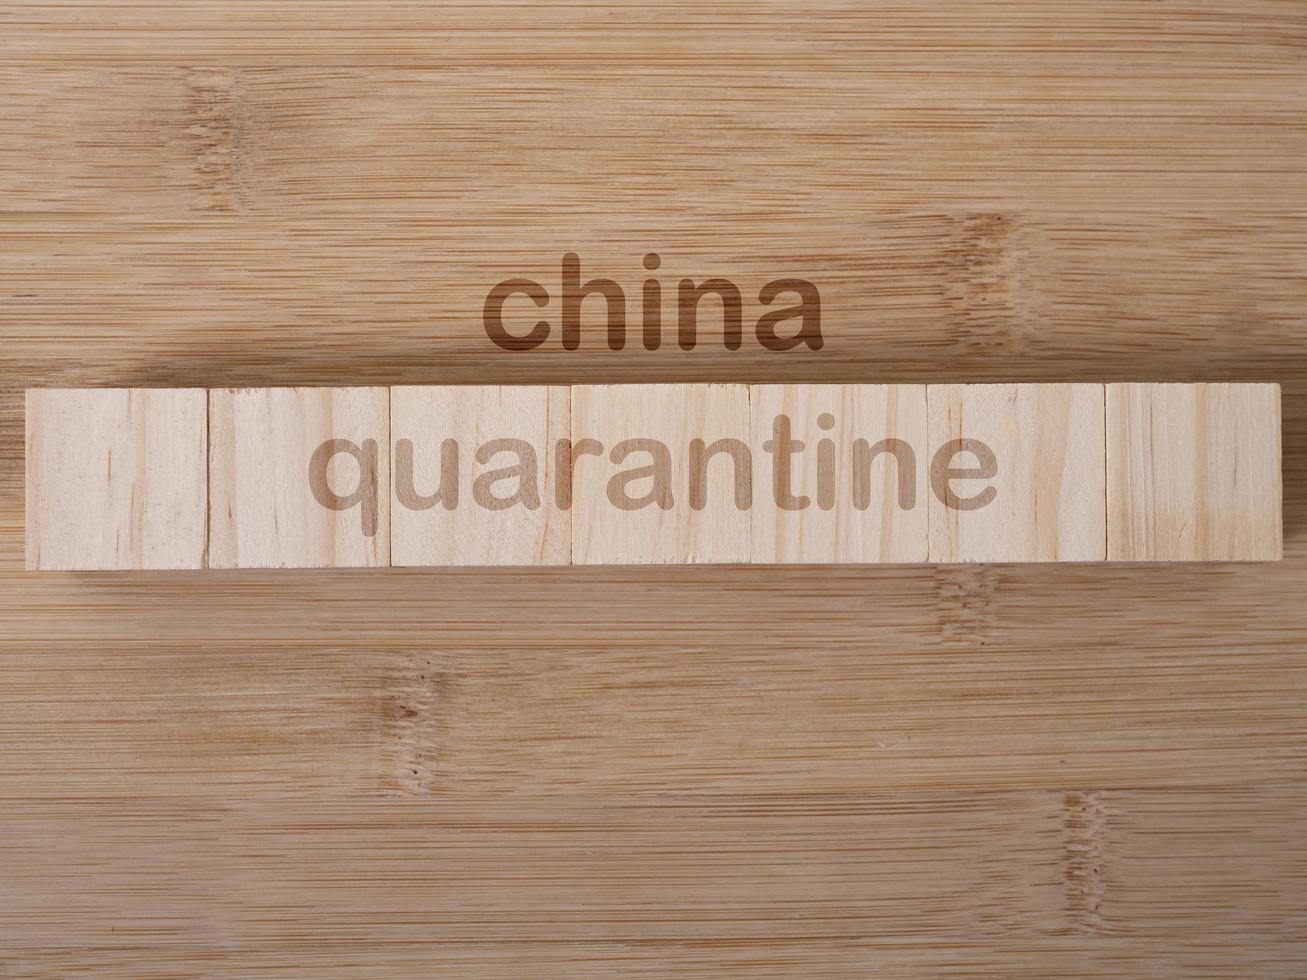 China quarantaine woord geschreven op hout blok. china quarantaine tekst op houten foto